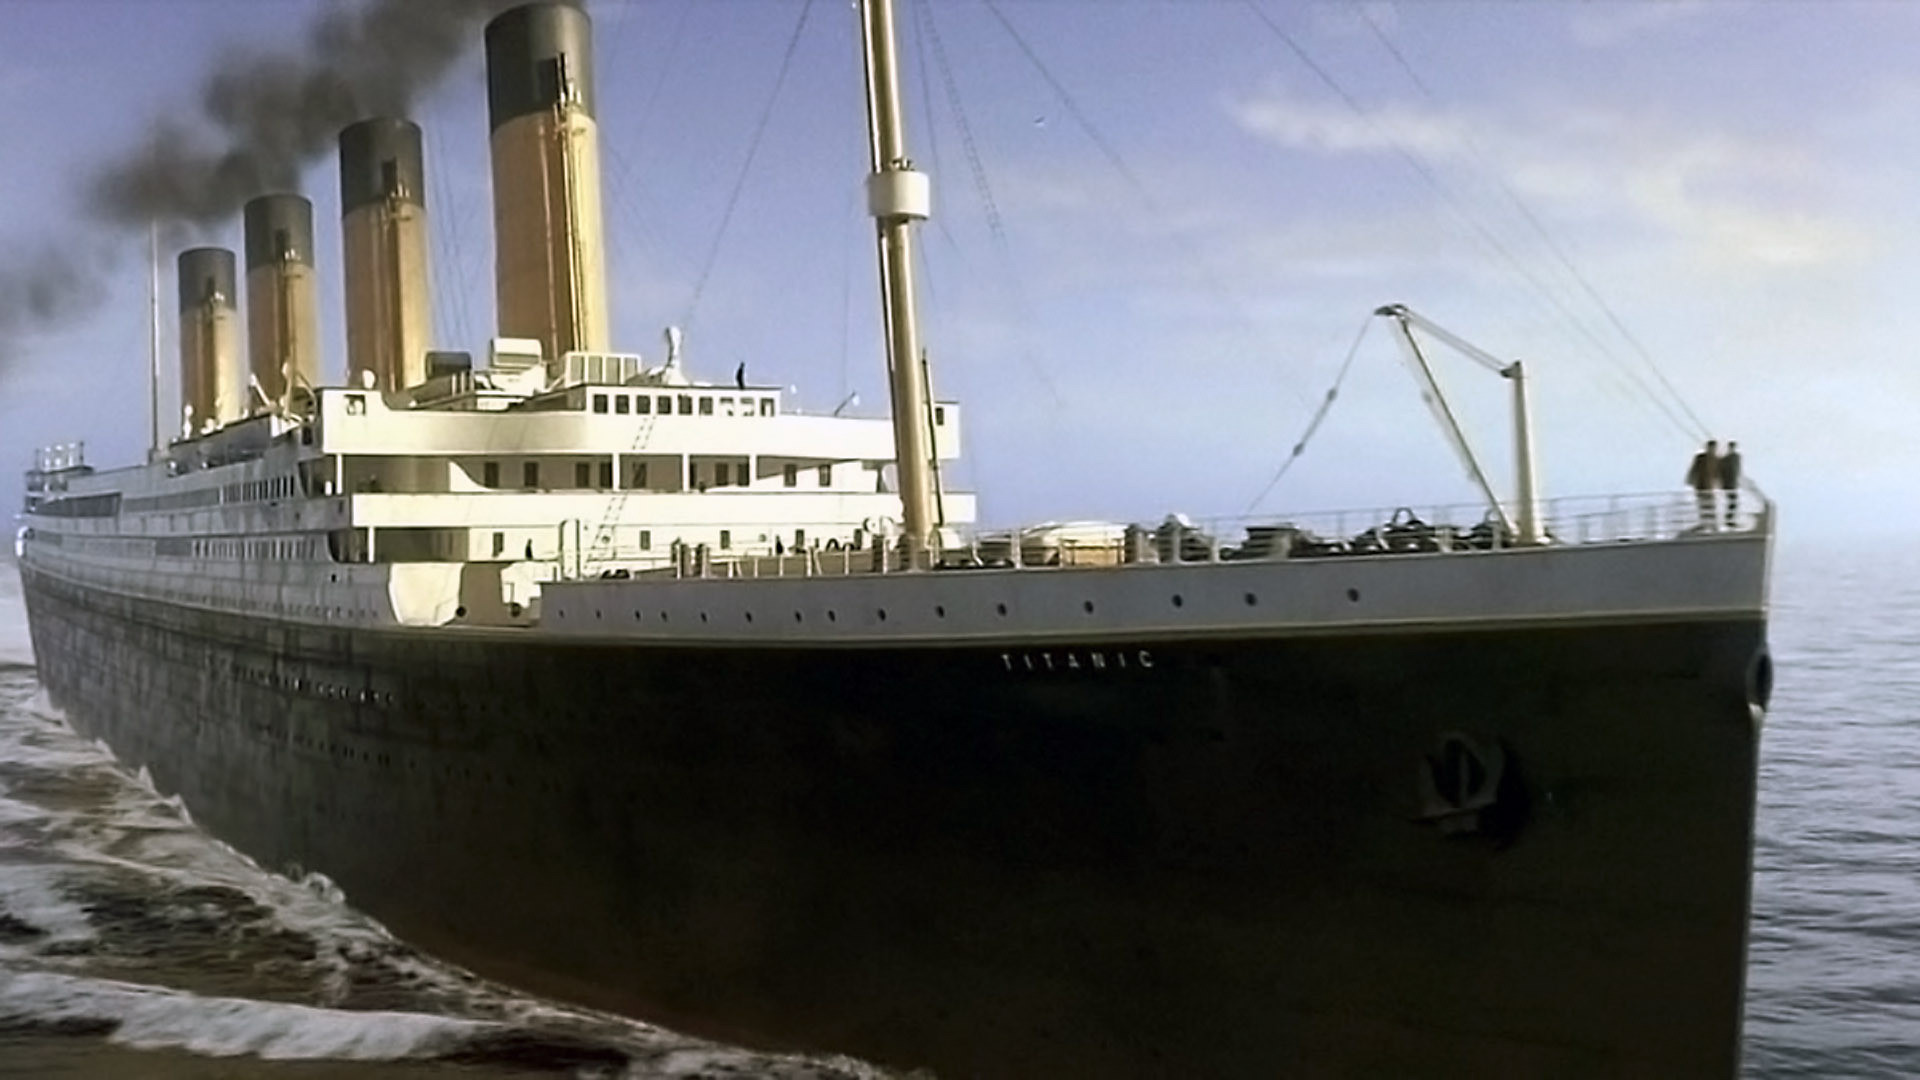 titanic, Disaster, Drama, Romance, Ship, Boat Wallpaper